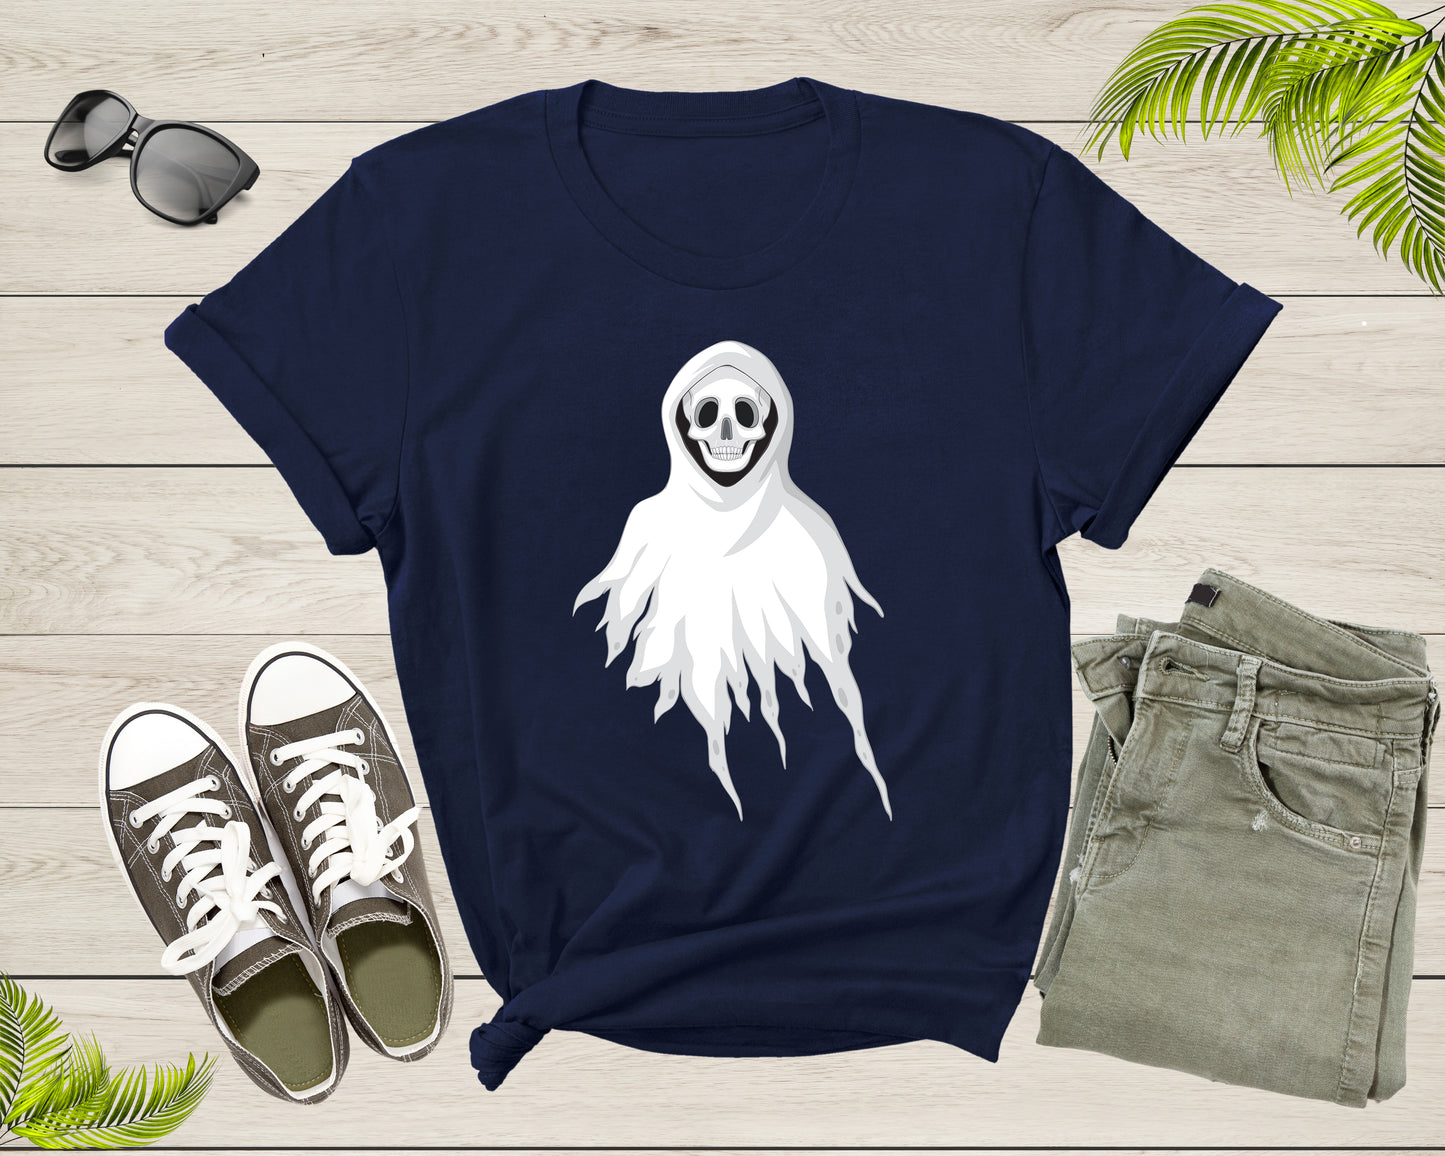 Halloween Ghost Lover Gift Men Women Kids Boys Girls Present T-Shirt Cool Spooky Halloween Lover Gift T Shirt for Teens Graphic Tshirt